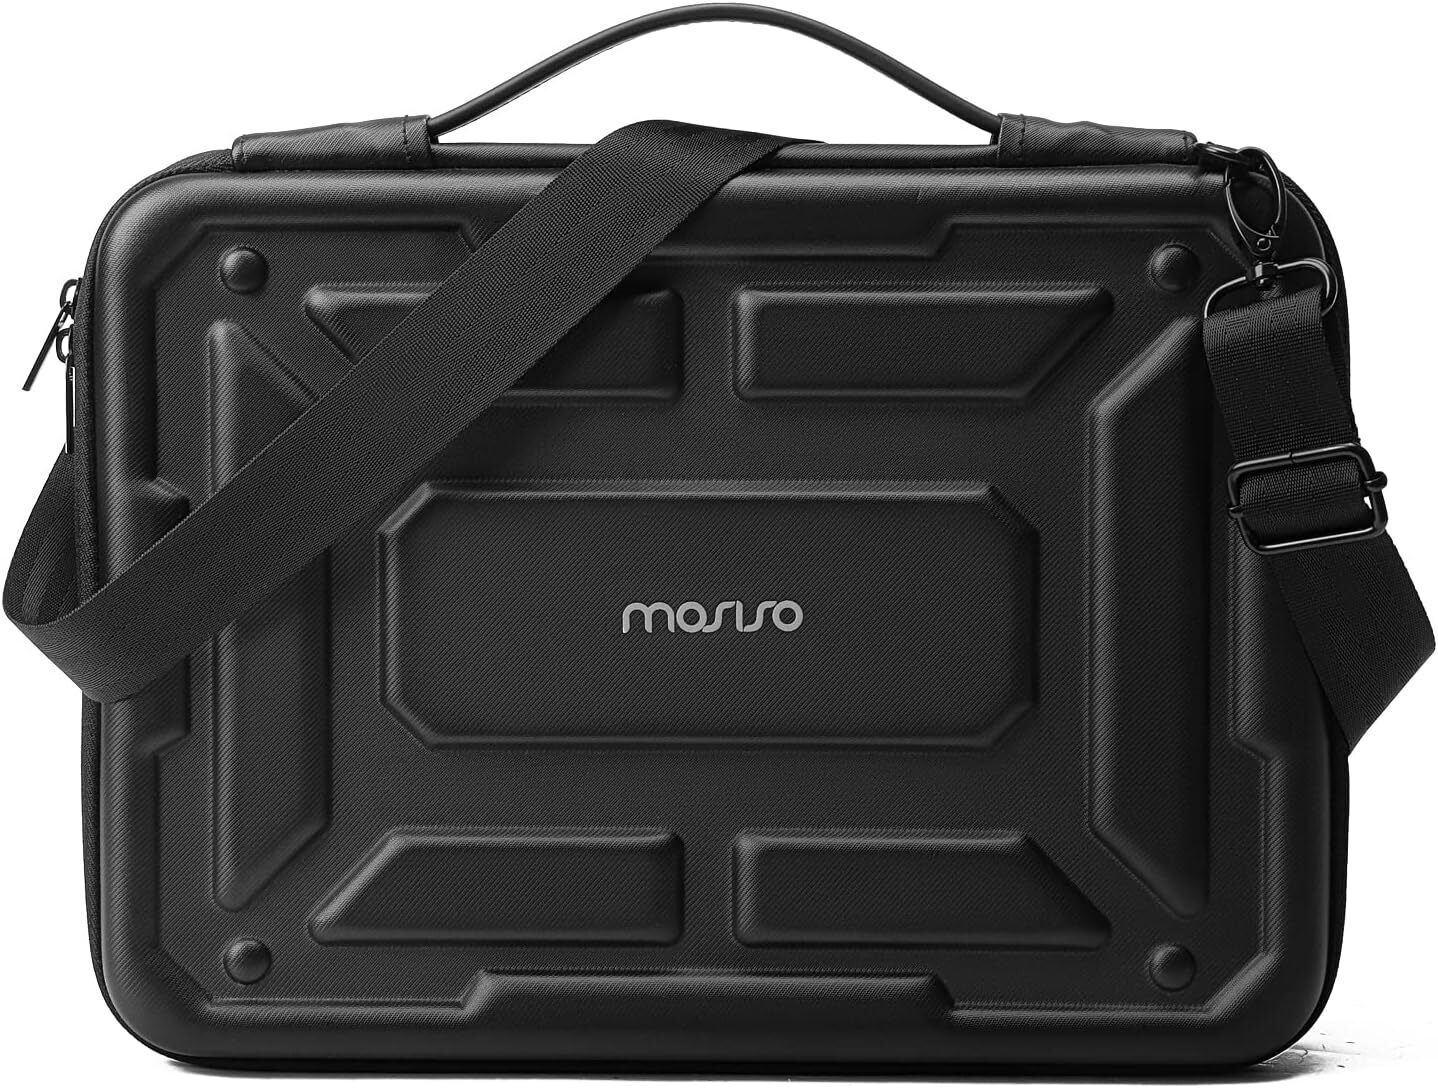 Waterproof Laptop Bag for MacBook Air Pro 13 14 15 16 inch M1 M2 M3 Sleeve Case